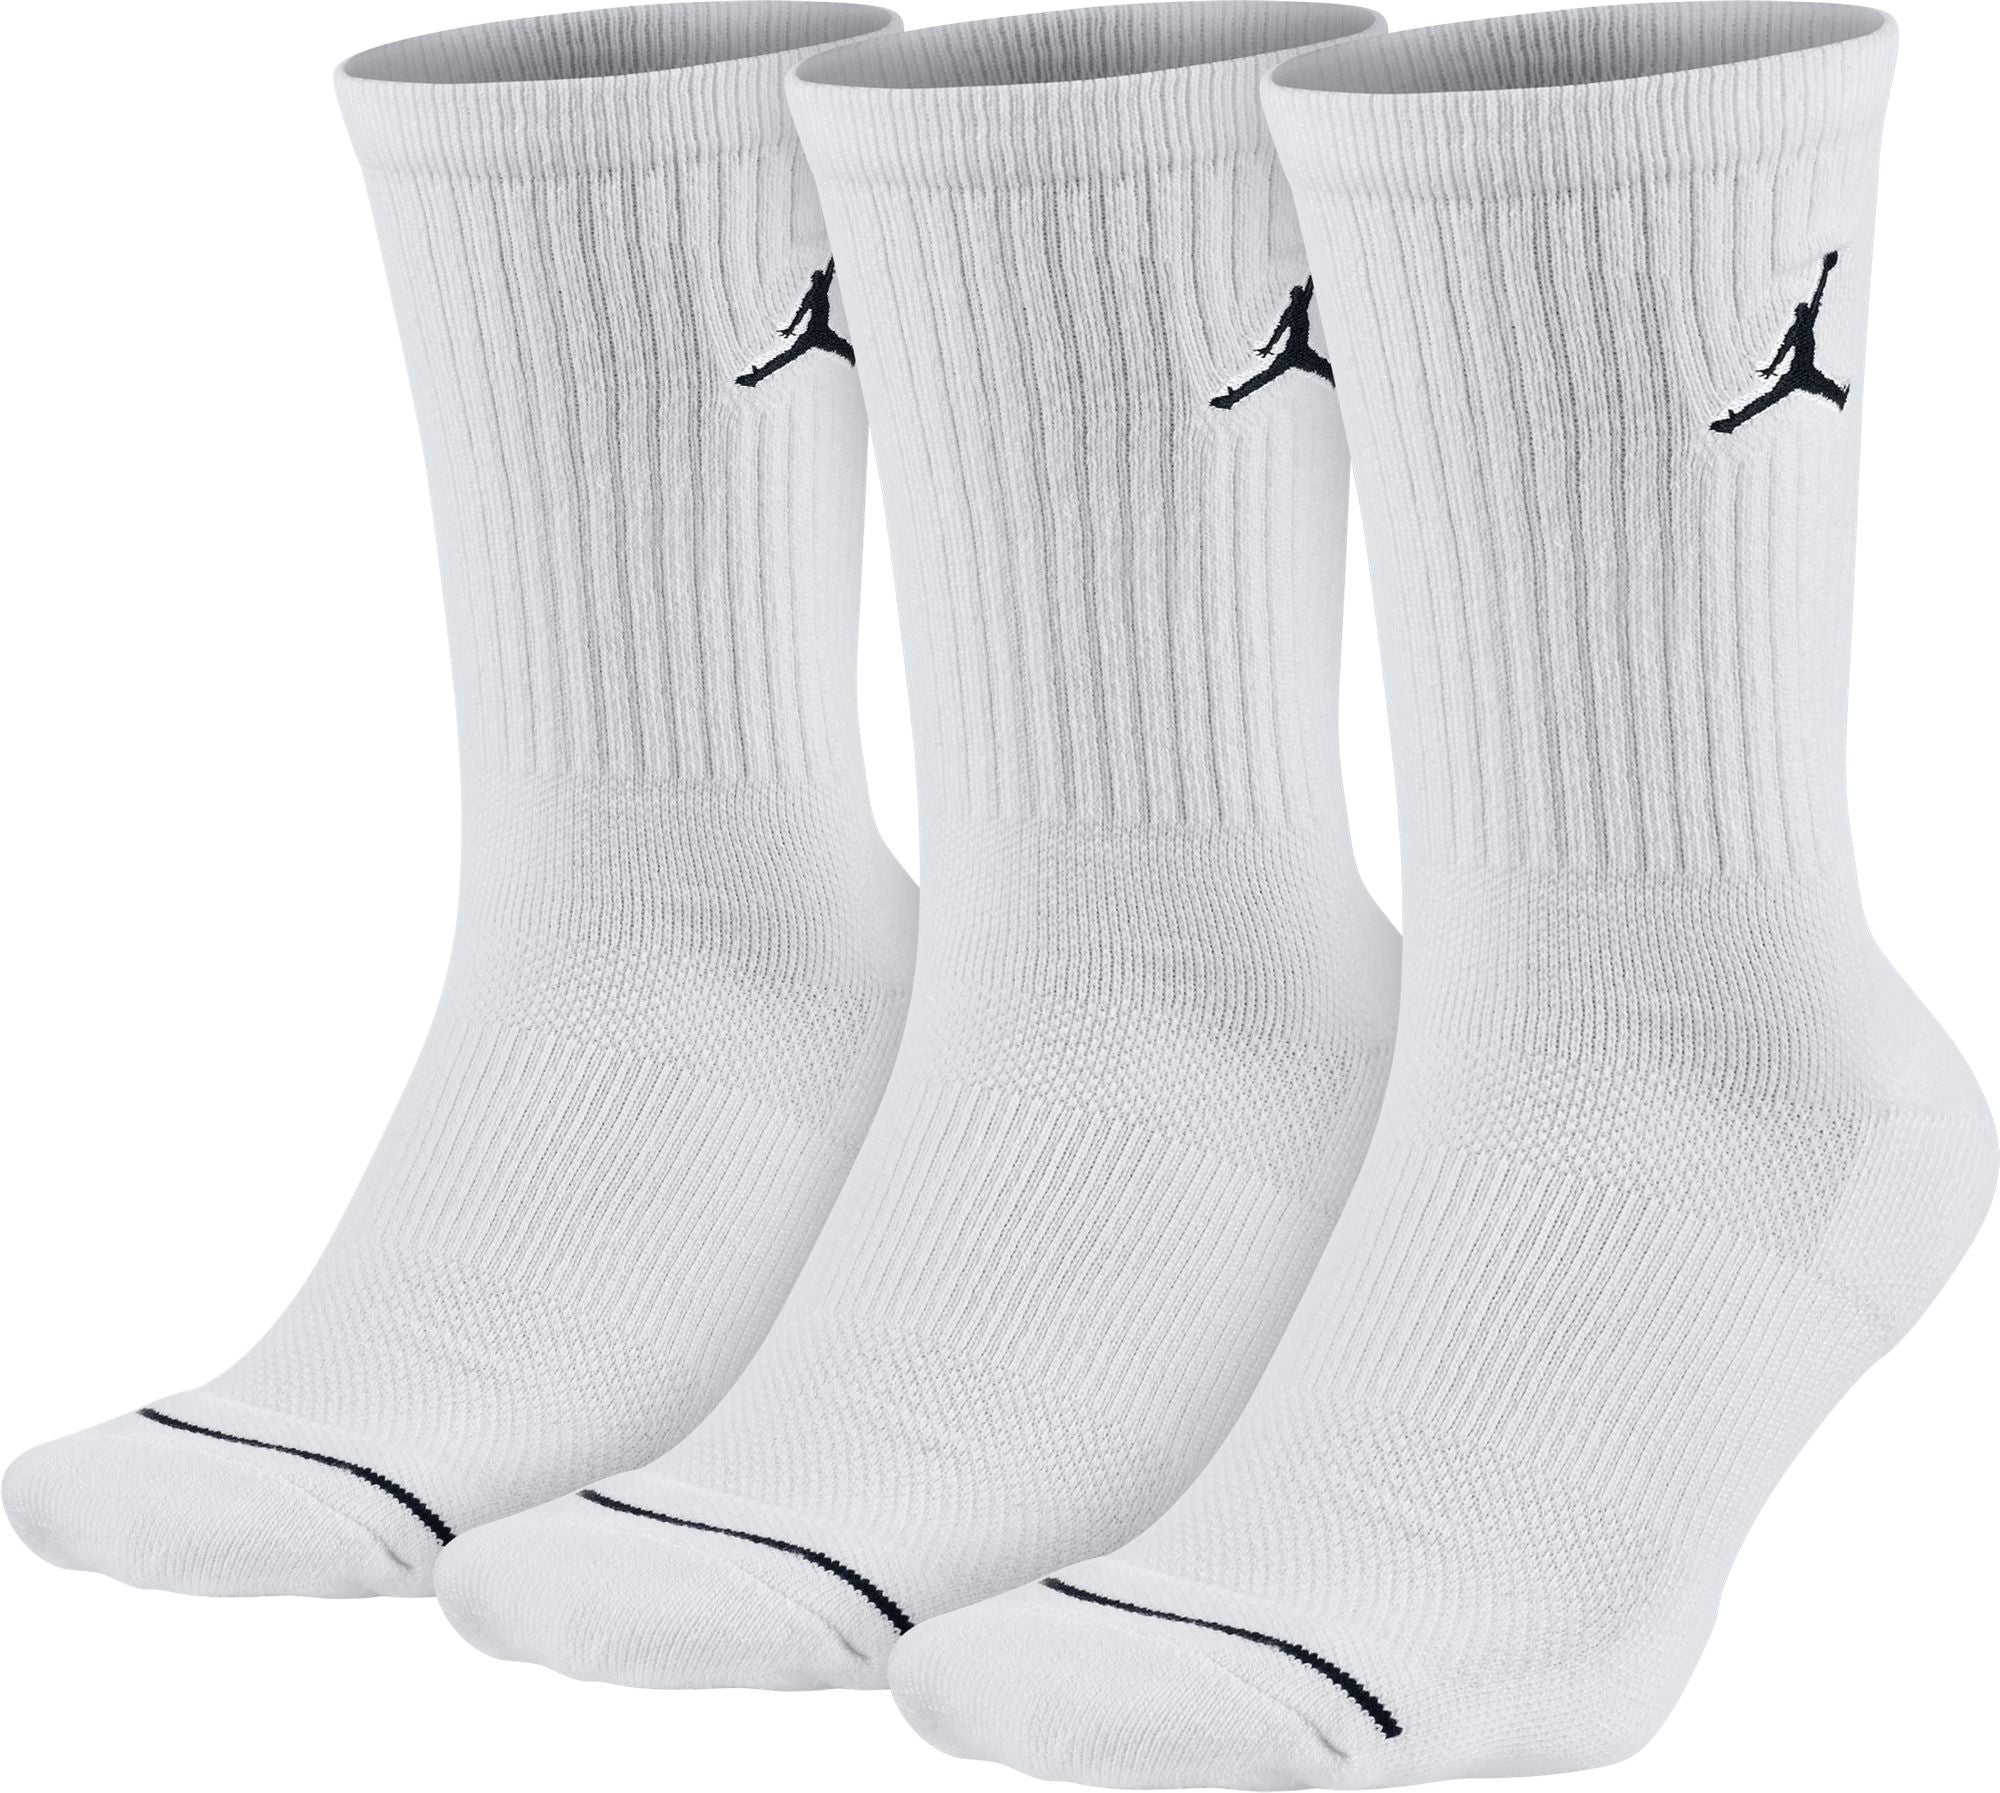 nike socks with jordans